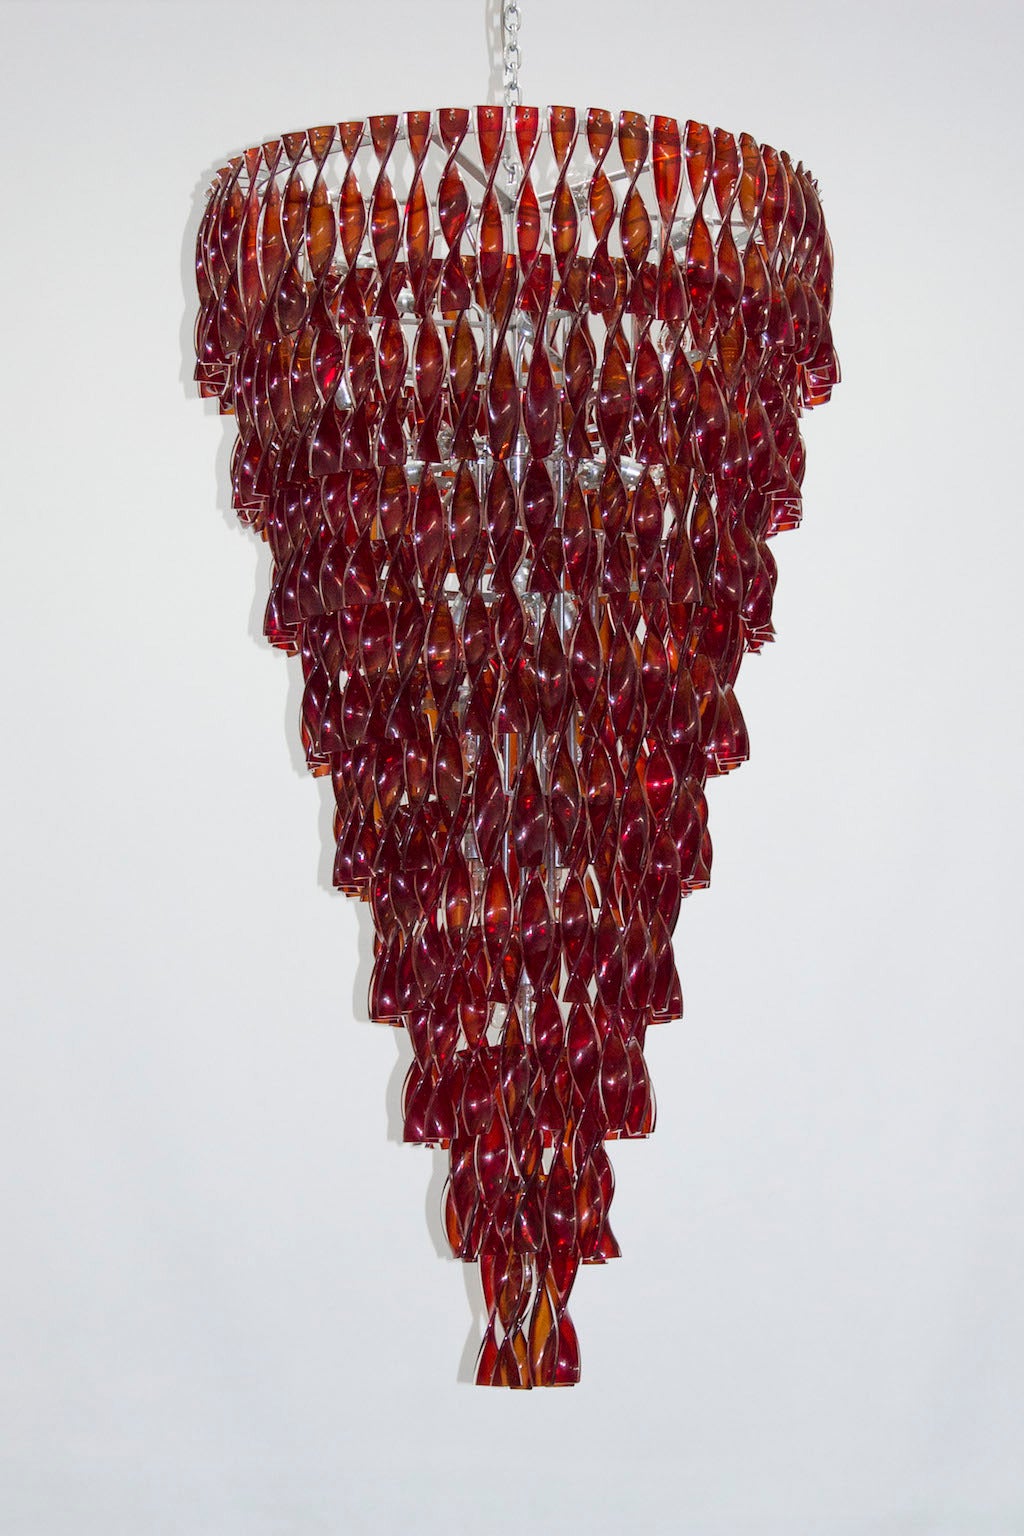 Italian Red Chandelier in Murano Glass, circa 1970s 1